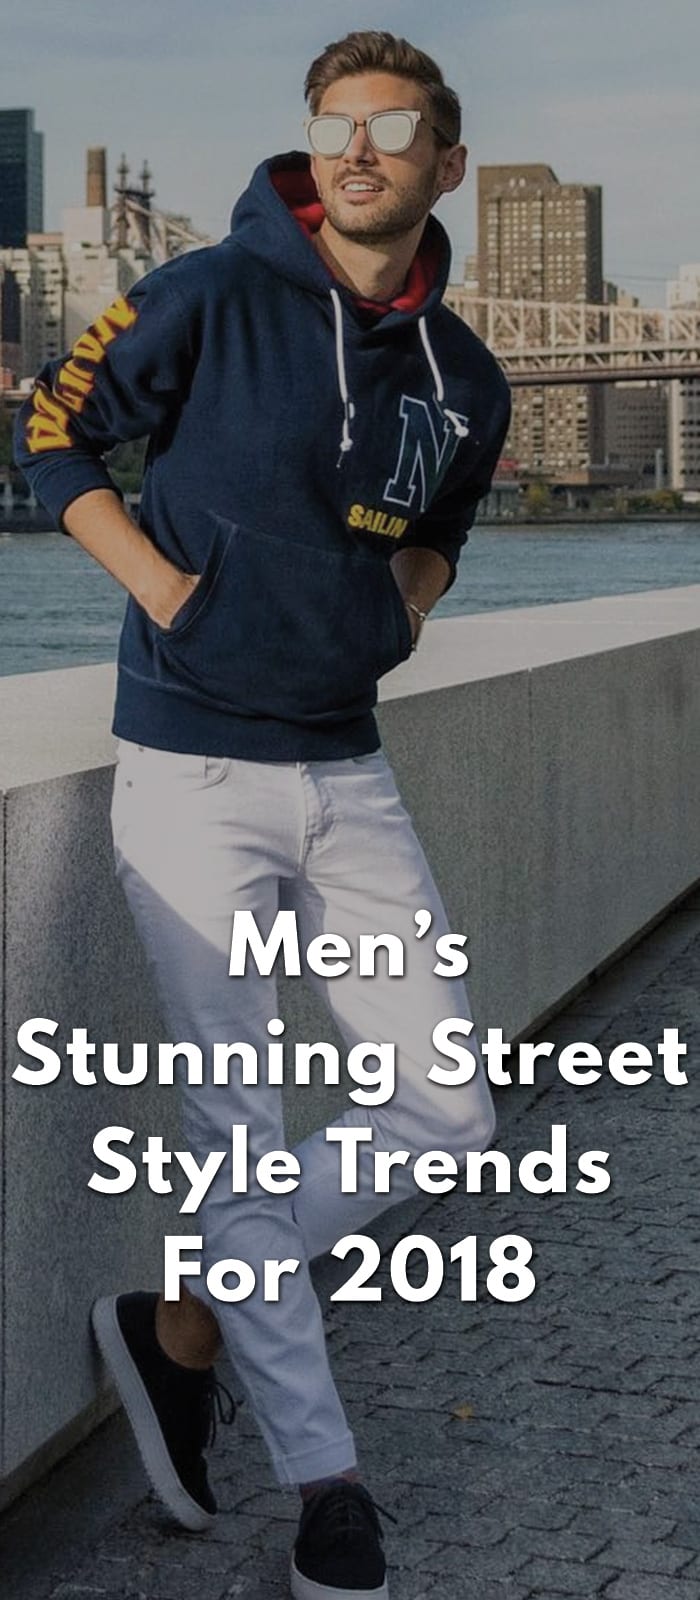 Men’s Stunning Street Style Trends For 2018